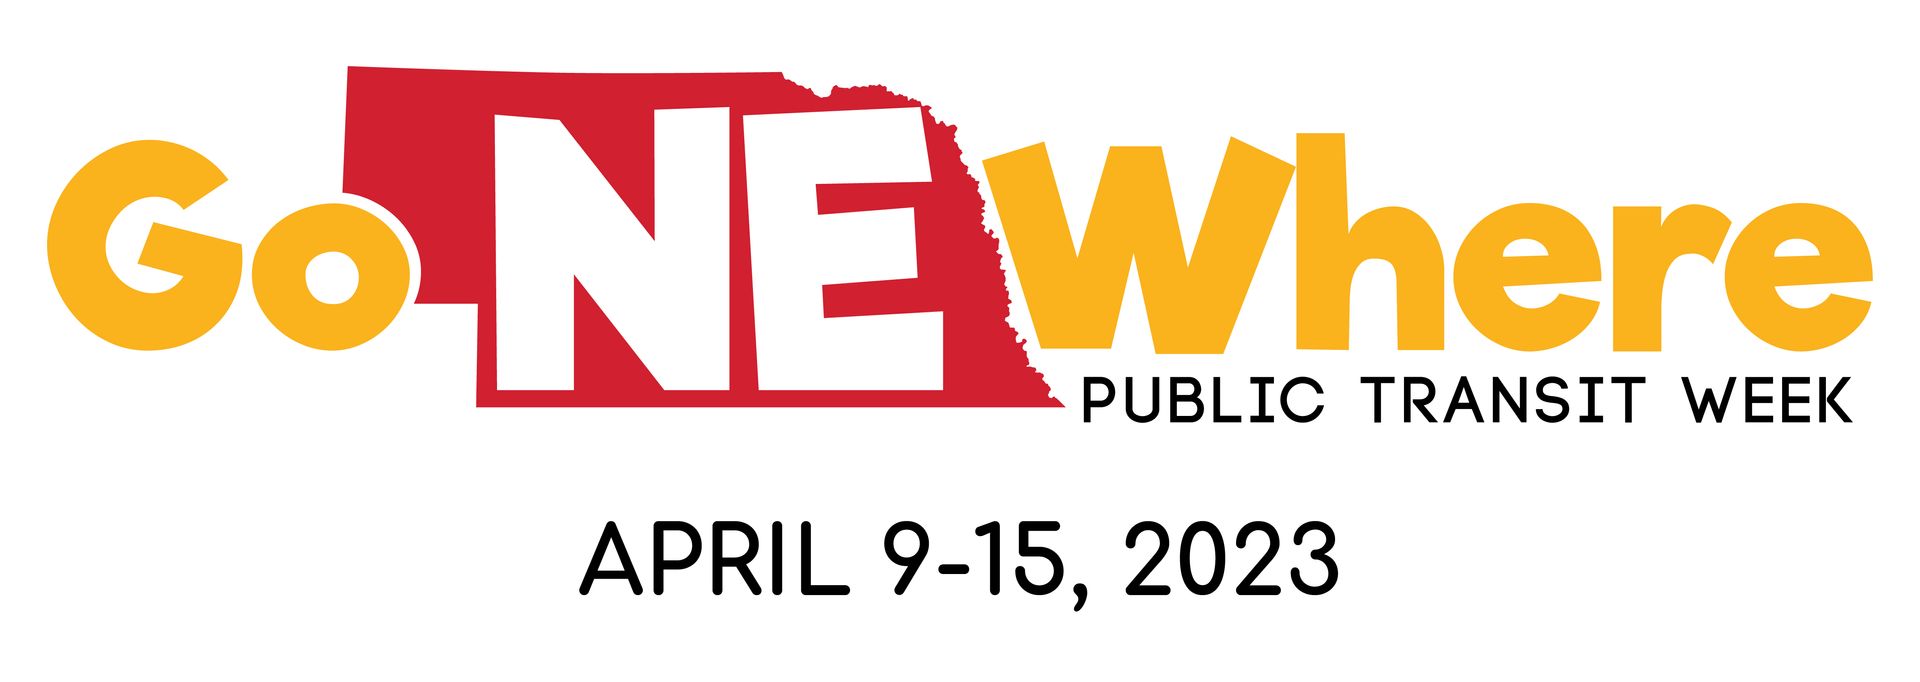 Go NEwhere Public Transit Week April 9-15, 2023 logo